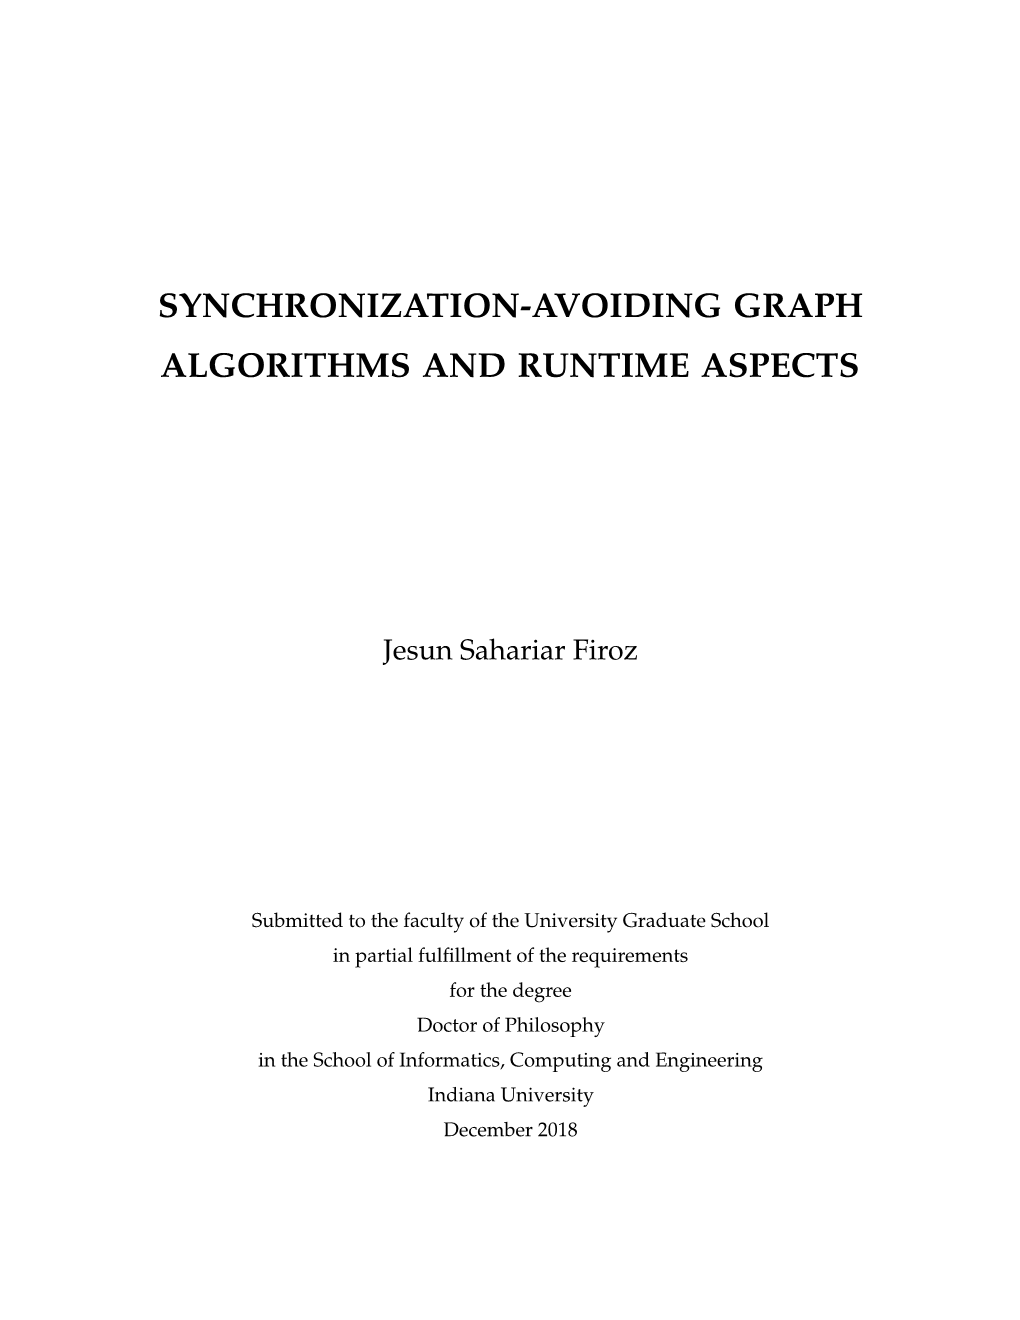 Synchronization-Avoiding Graph Algorithms and Runtime Aspects